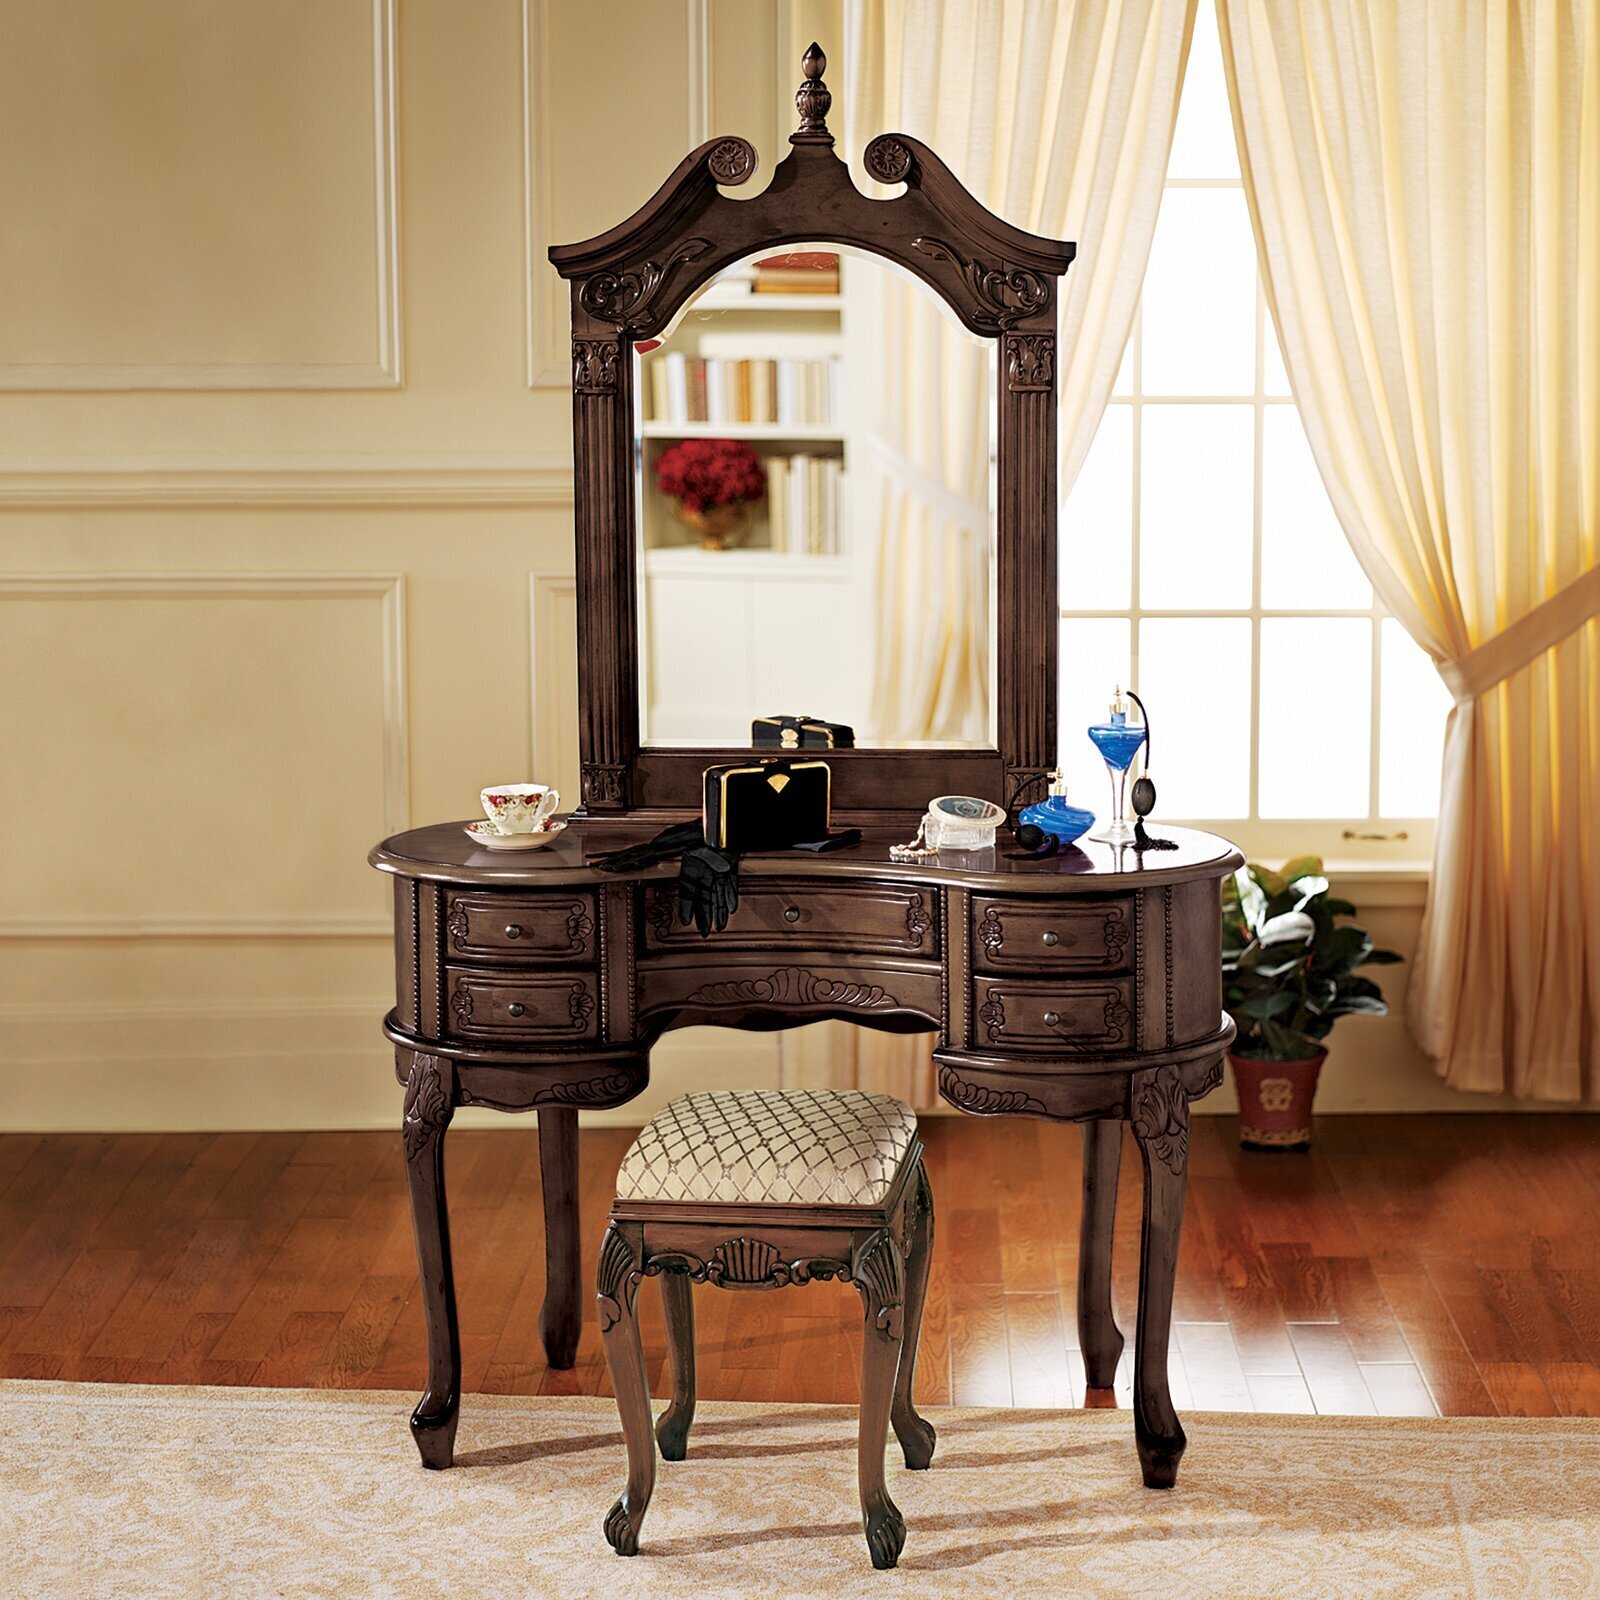 Majestic antique mahogany makeup table